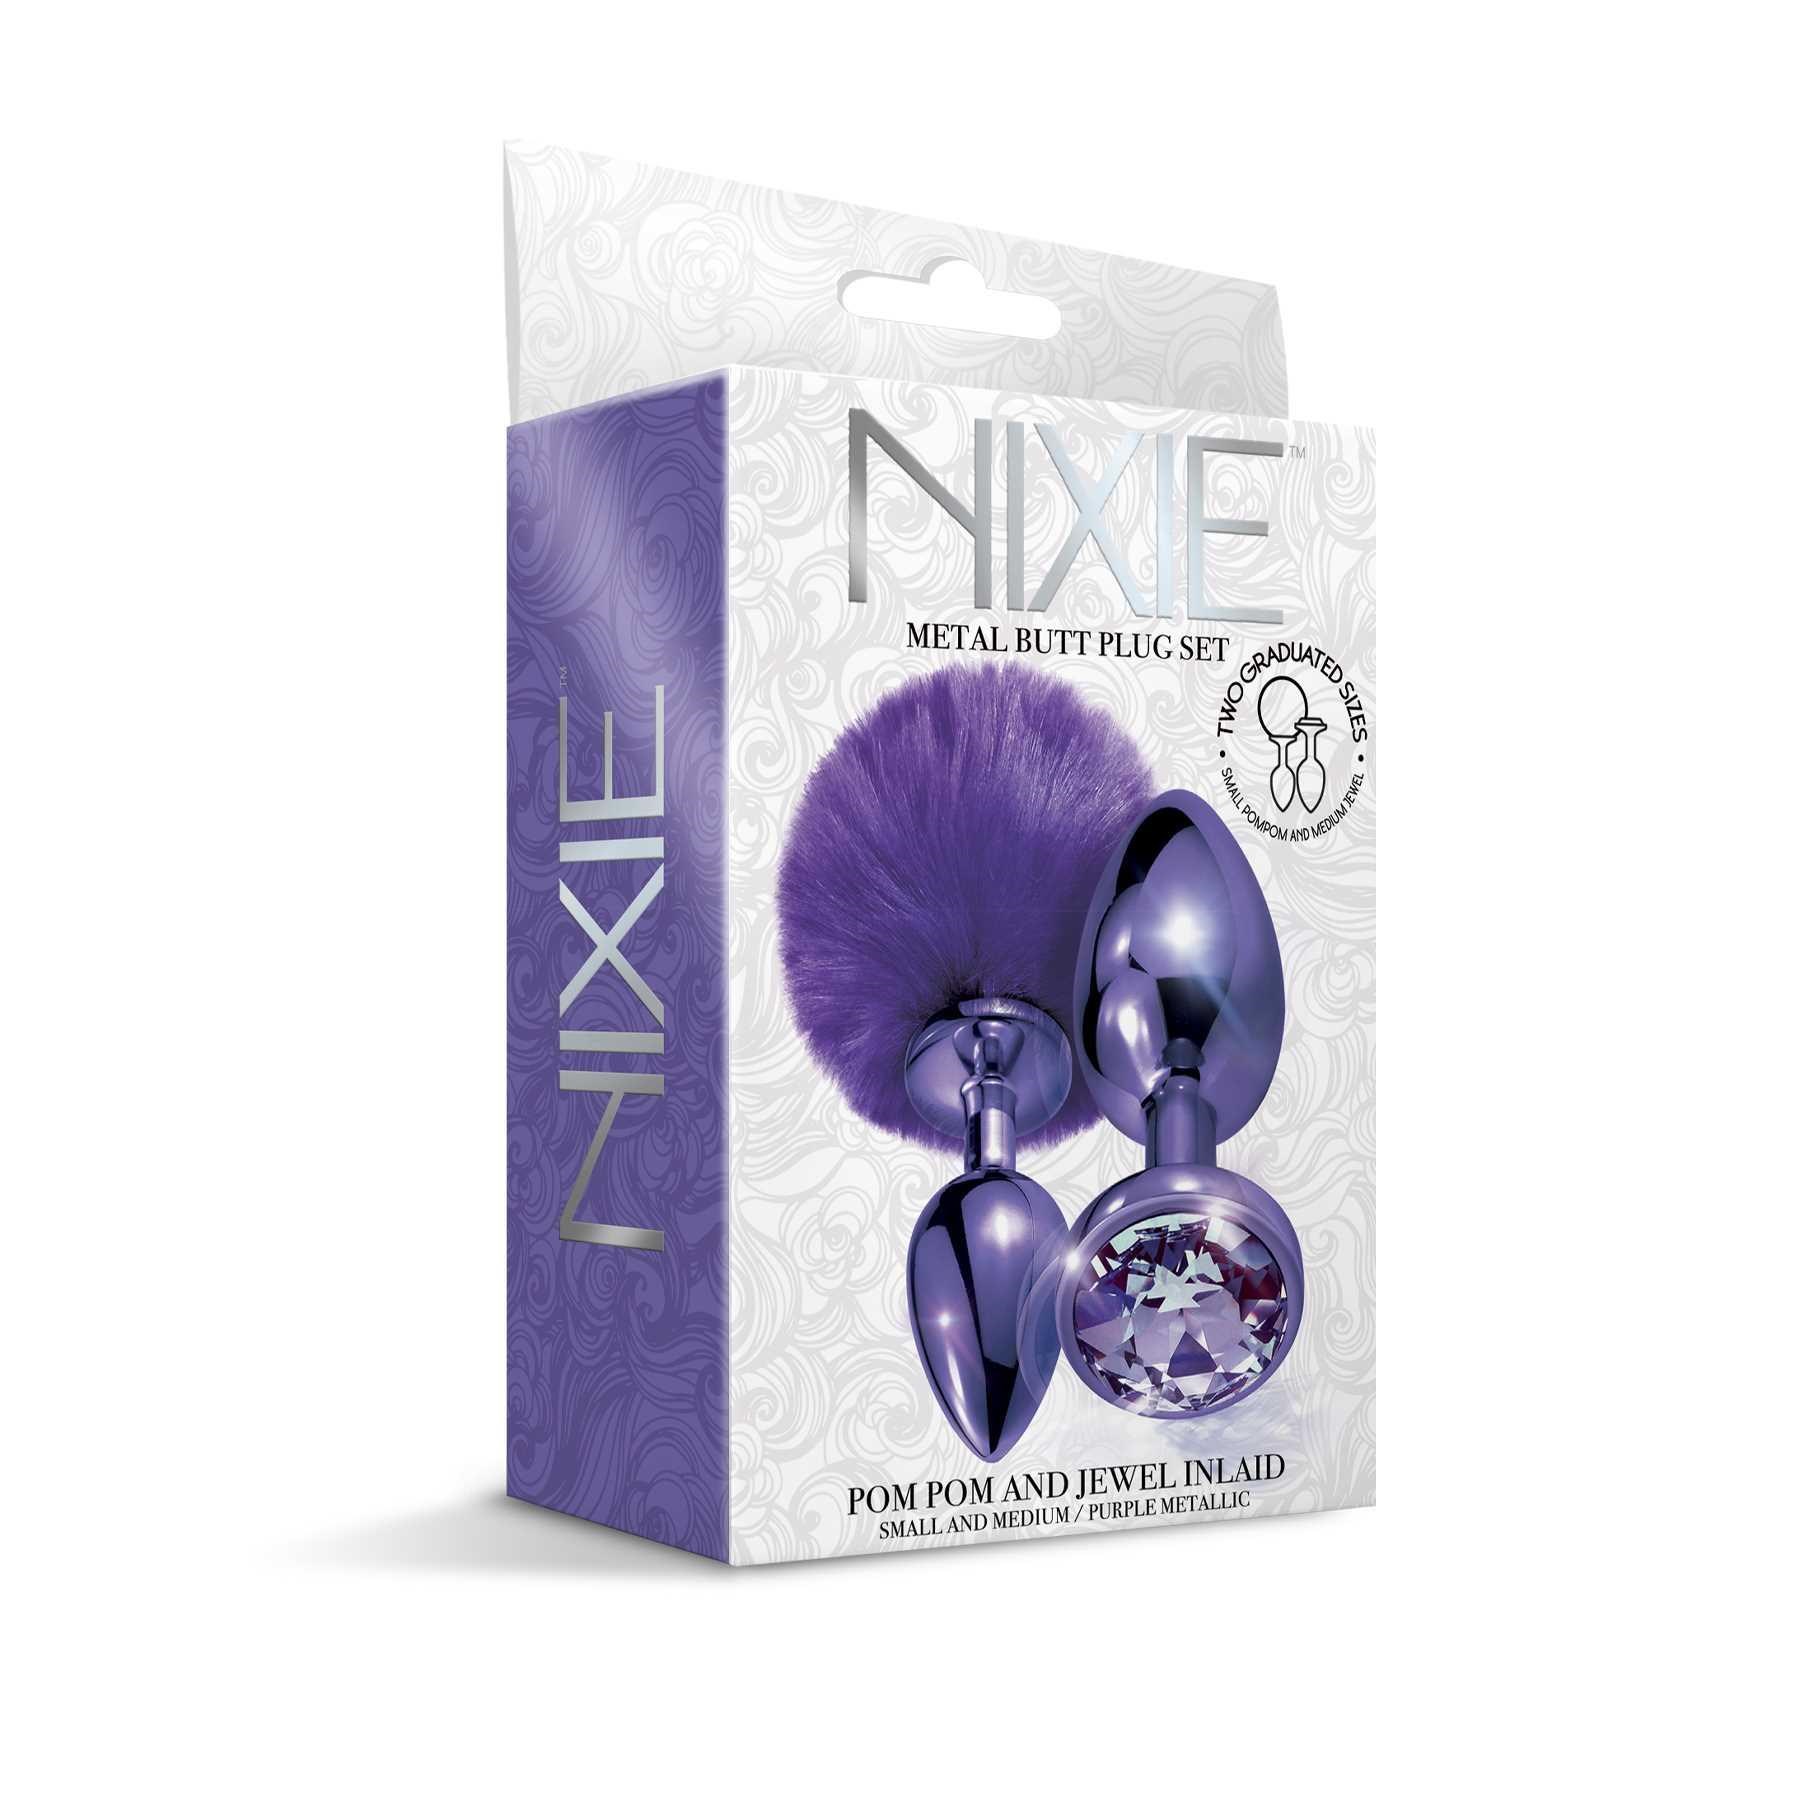 NIXIE Metal Butt Plug Set Pom Pom and Jewel Inlaid Metallic purple box